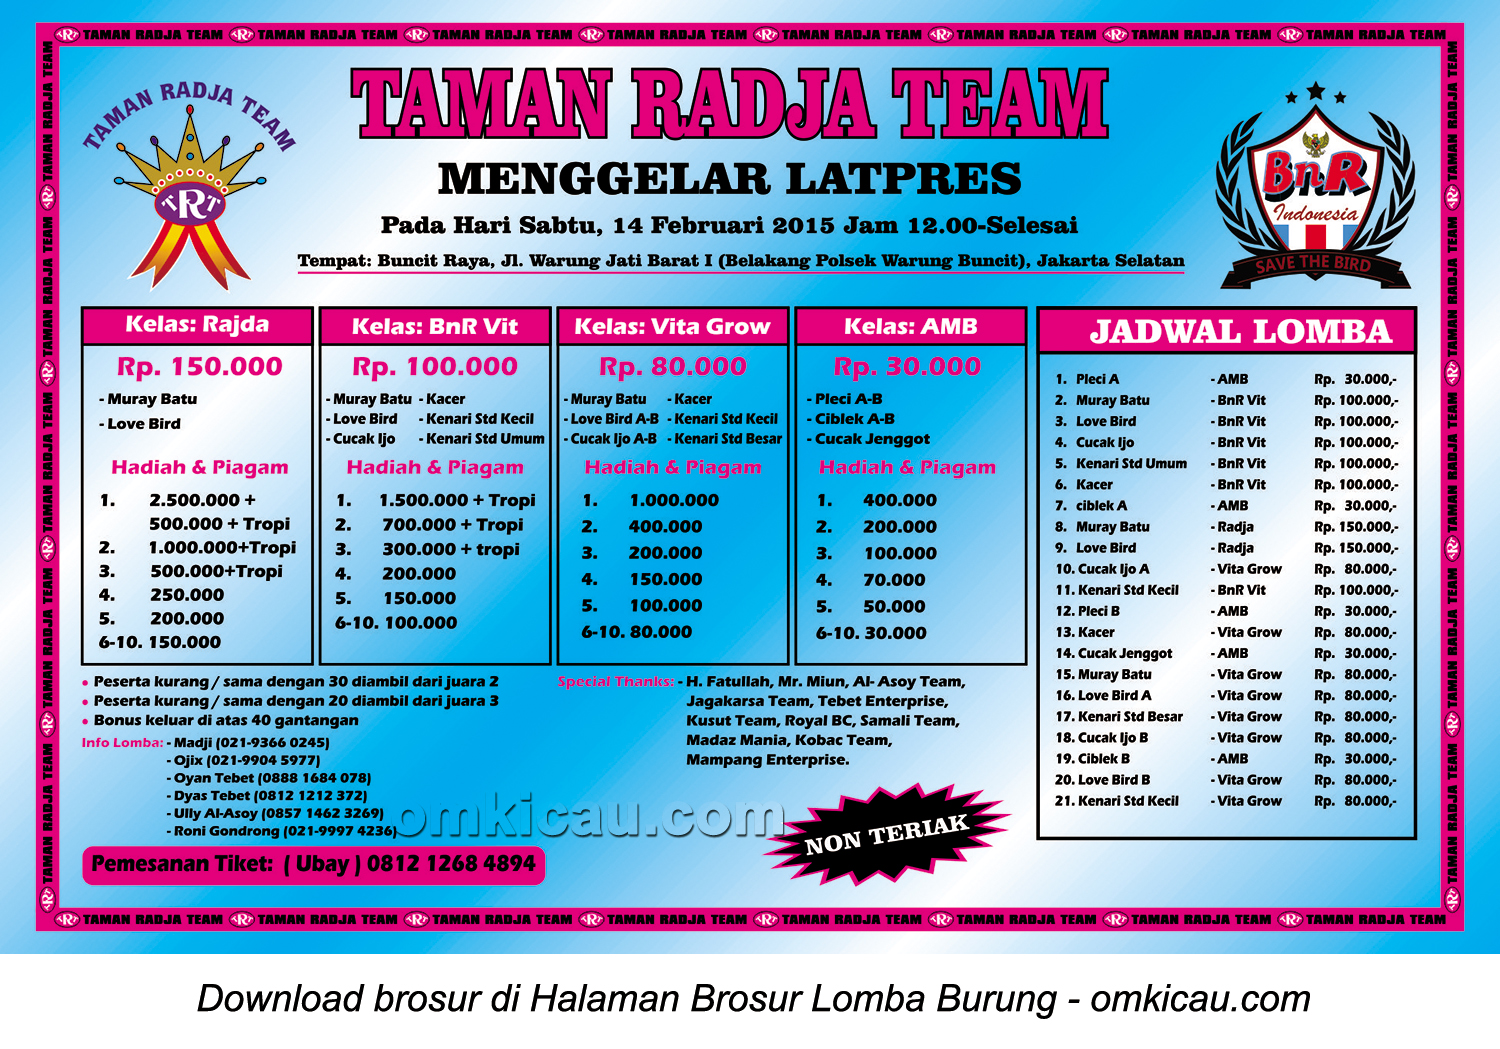 Brosur Latpres Taman Radja Team, Jakarta Selatan, 14 Februari 2015